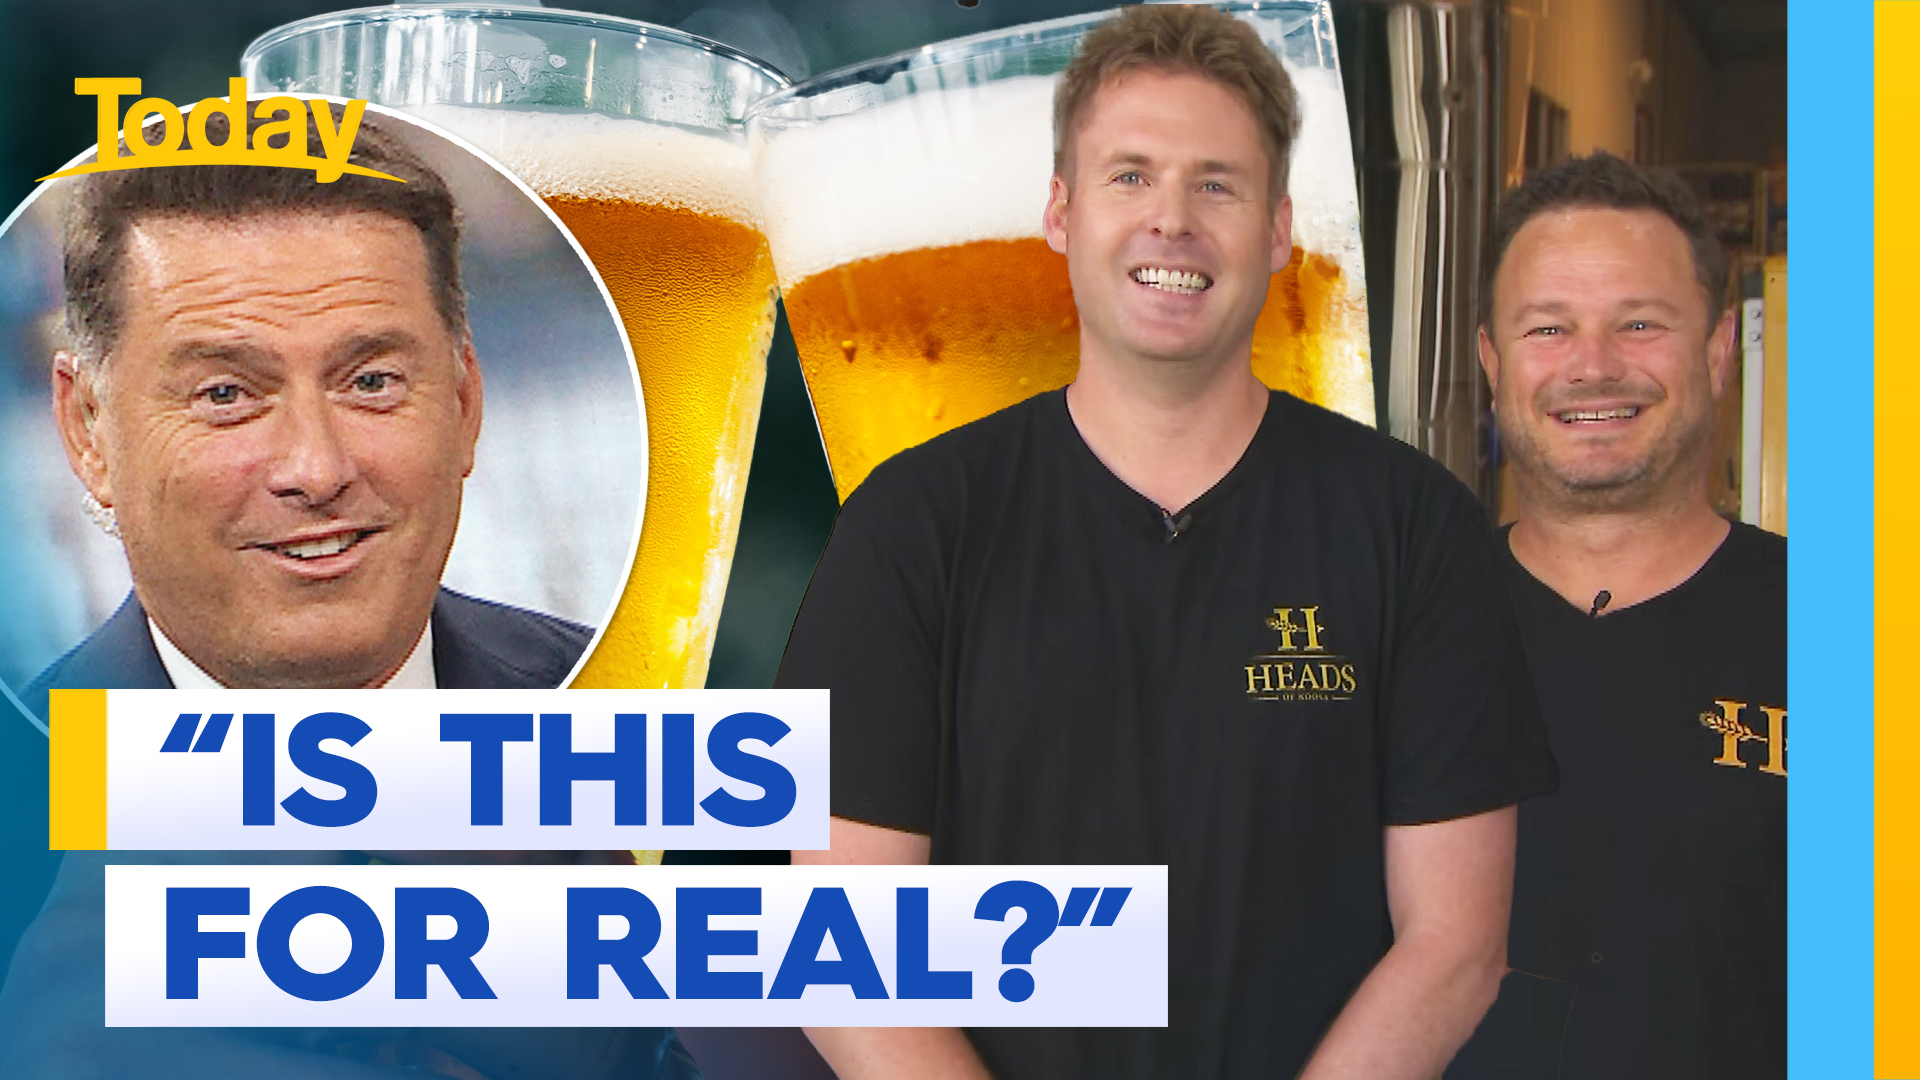 Queensland brewery hires official beer taster